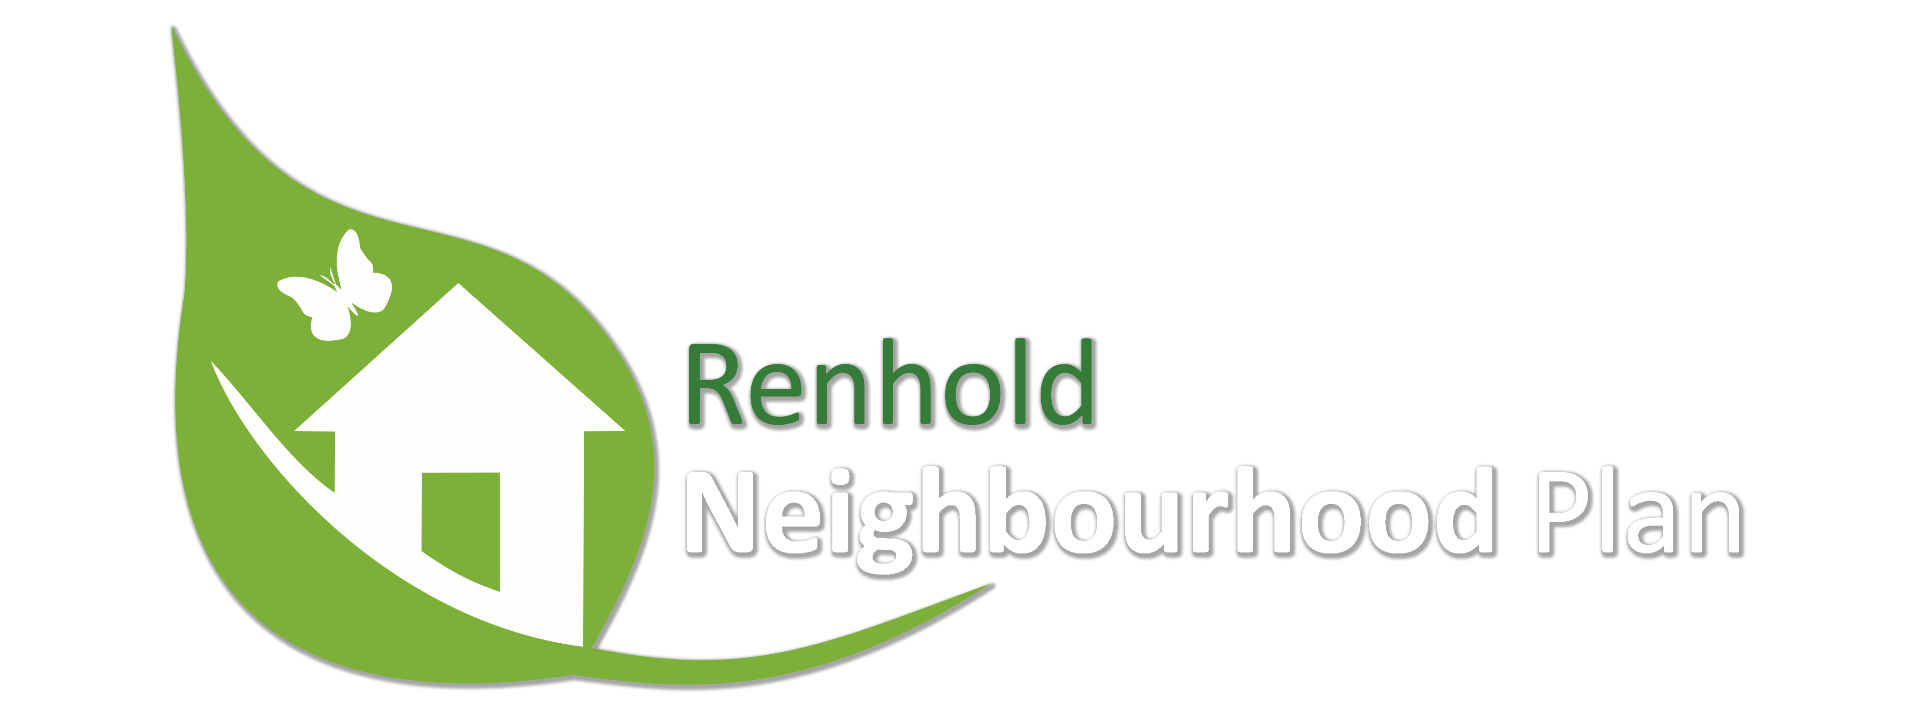 Renhold Neighbourhood Plan Logo